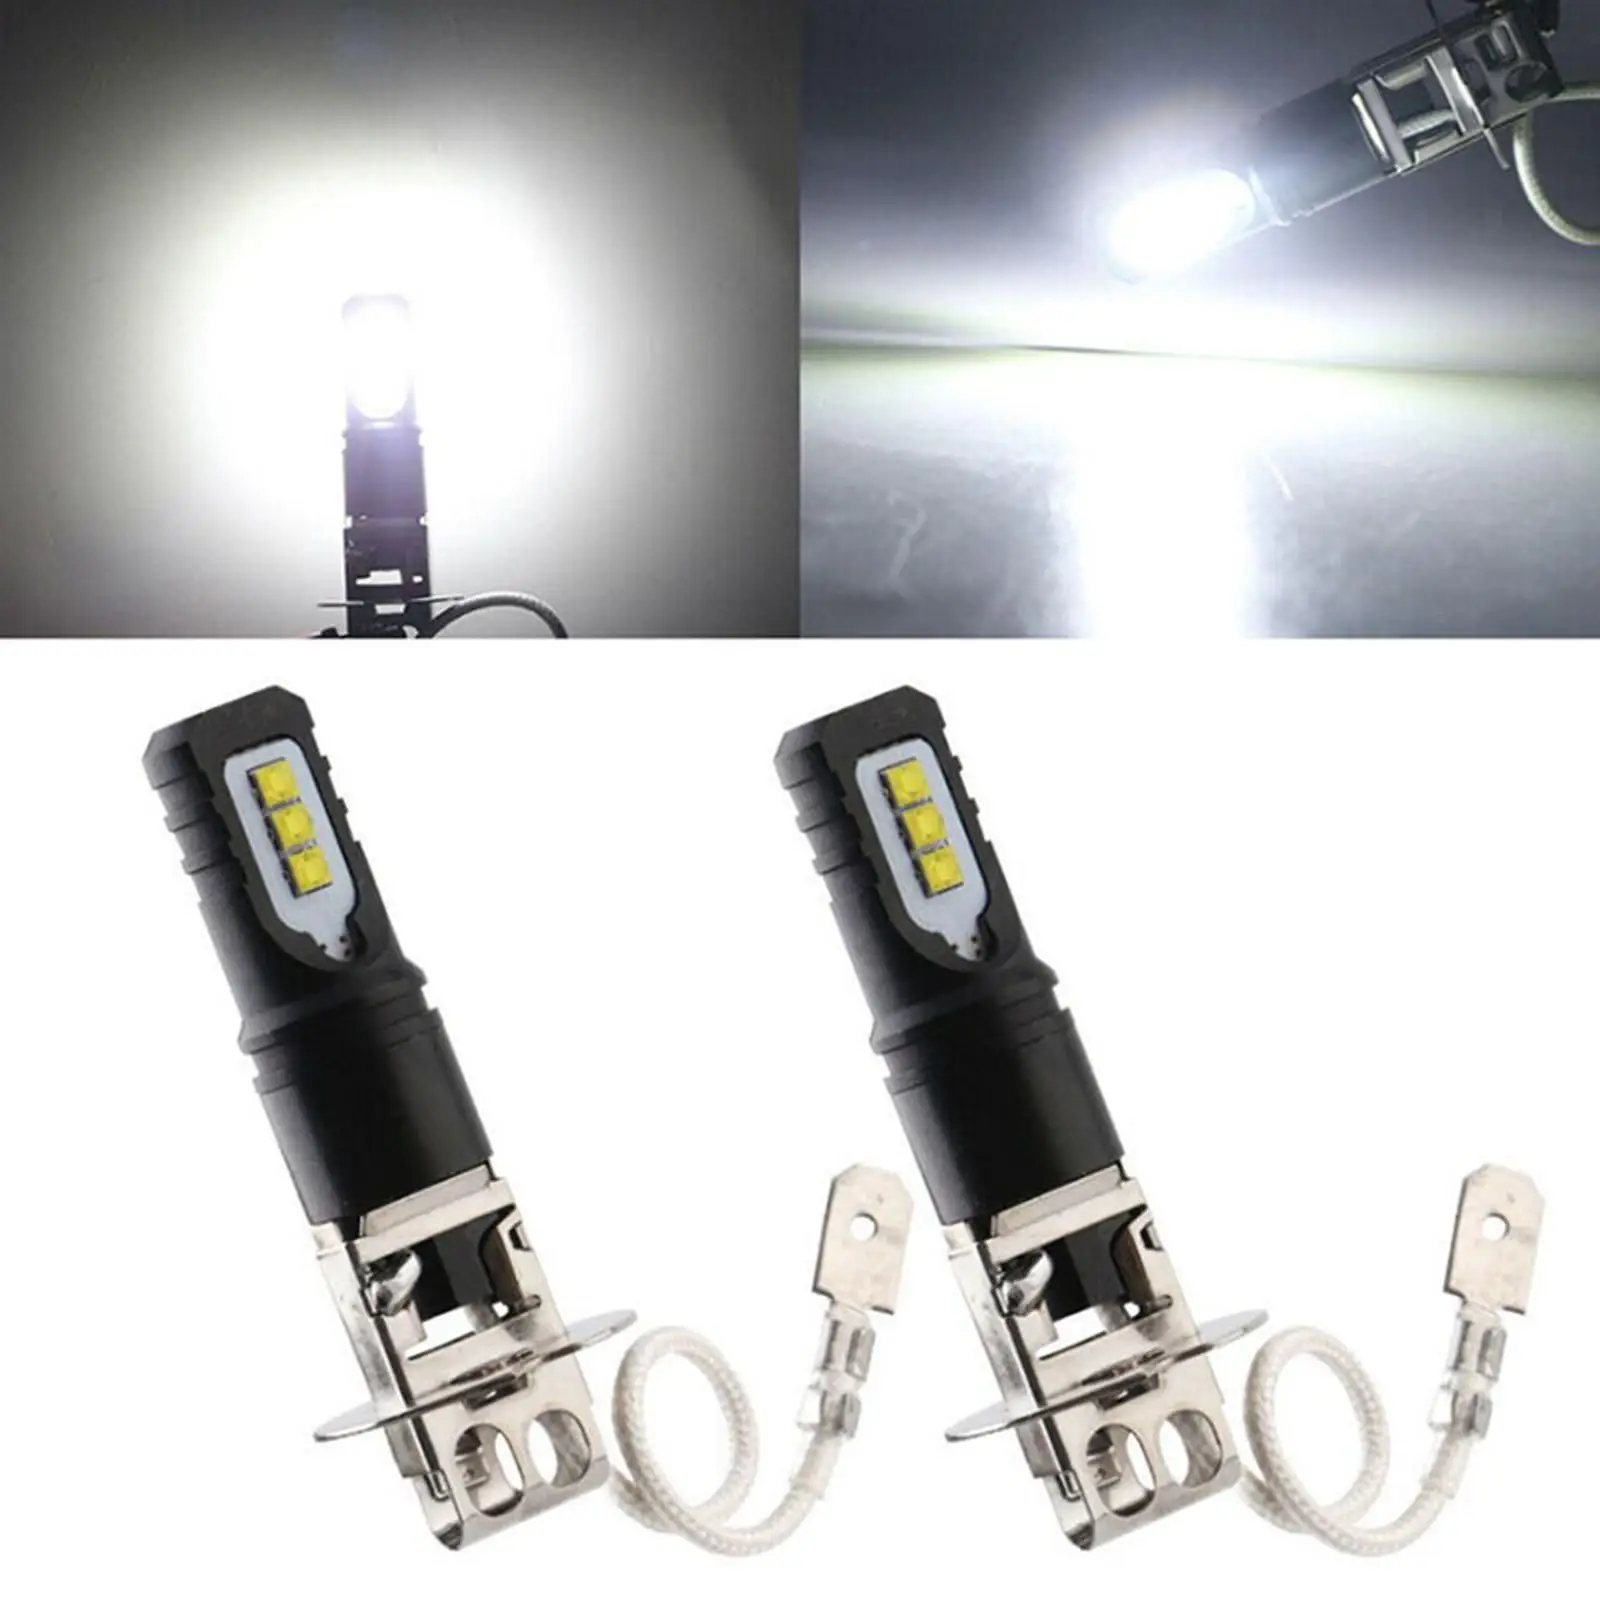 2-Pack Auto LED Fog Light Bulbs H1 H3 1200LM 12-30V High Power Daytime Running Lights Fits for Car Trucks Lighting Components